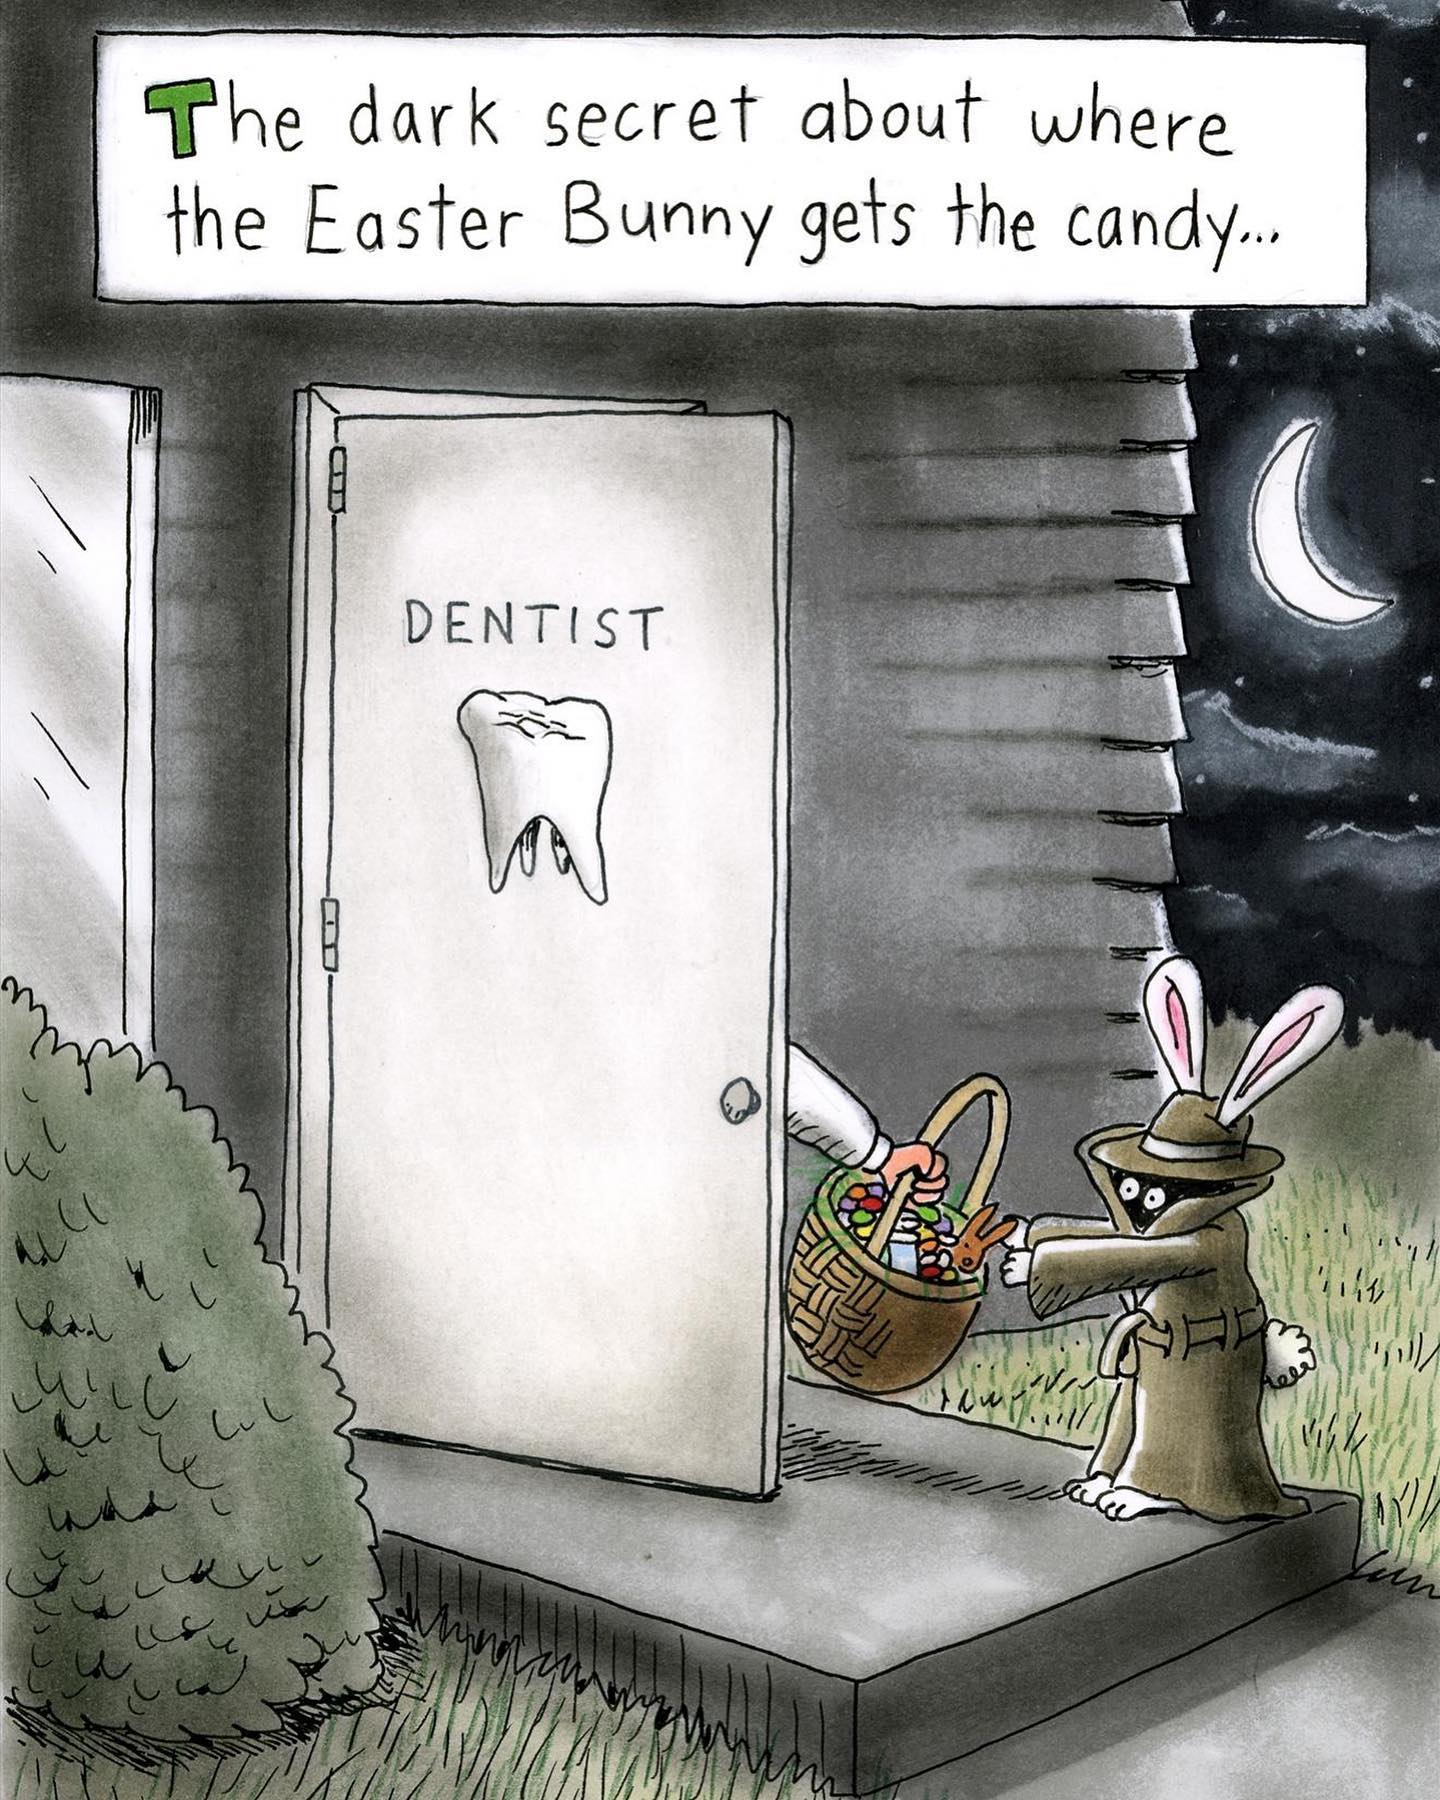 Happy Easter 🐰 

.

.

.

.
#happyeaster #easteregghunt #eastercandy #chocolate #symbiotic #workingtogether #dental #dentist #oakbaylocal #oakbaydentist #yyjdentist #beautifulbc #victoriabc